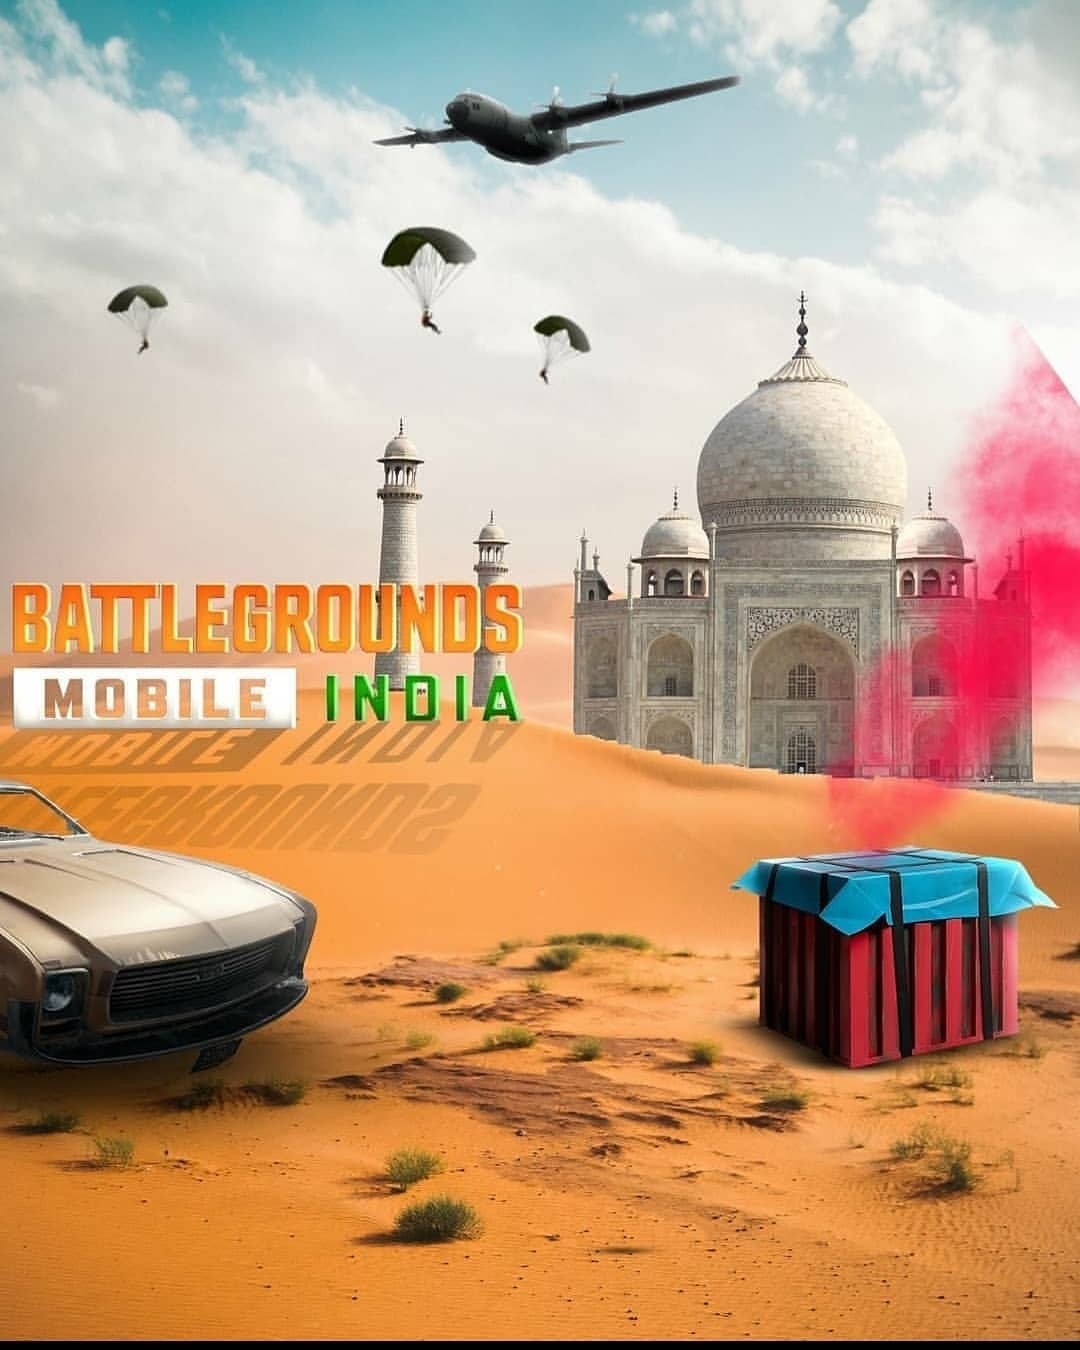 Battleground mobile india wallpapers